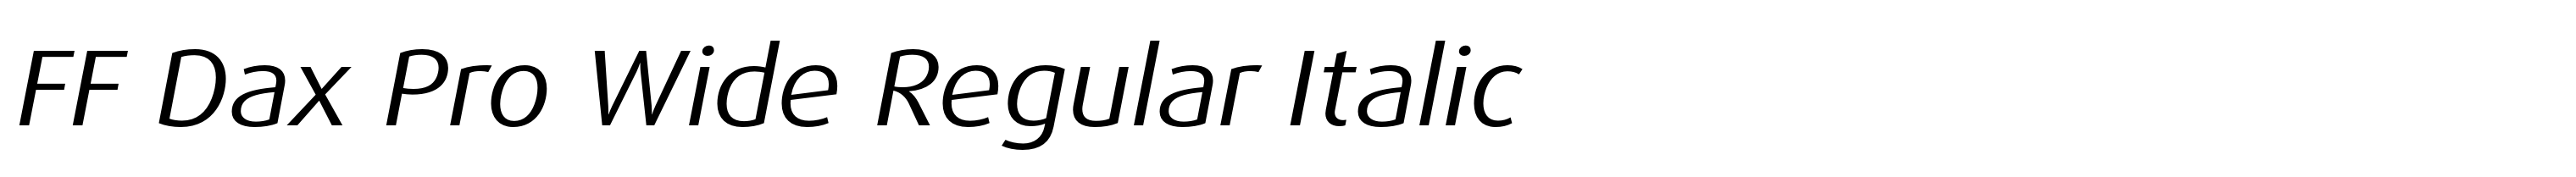 FF Dax Pro Wide Regular Italic